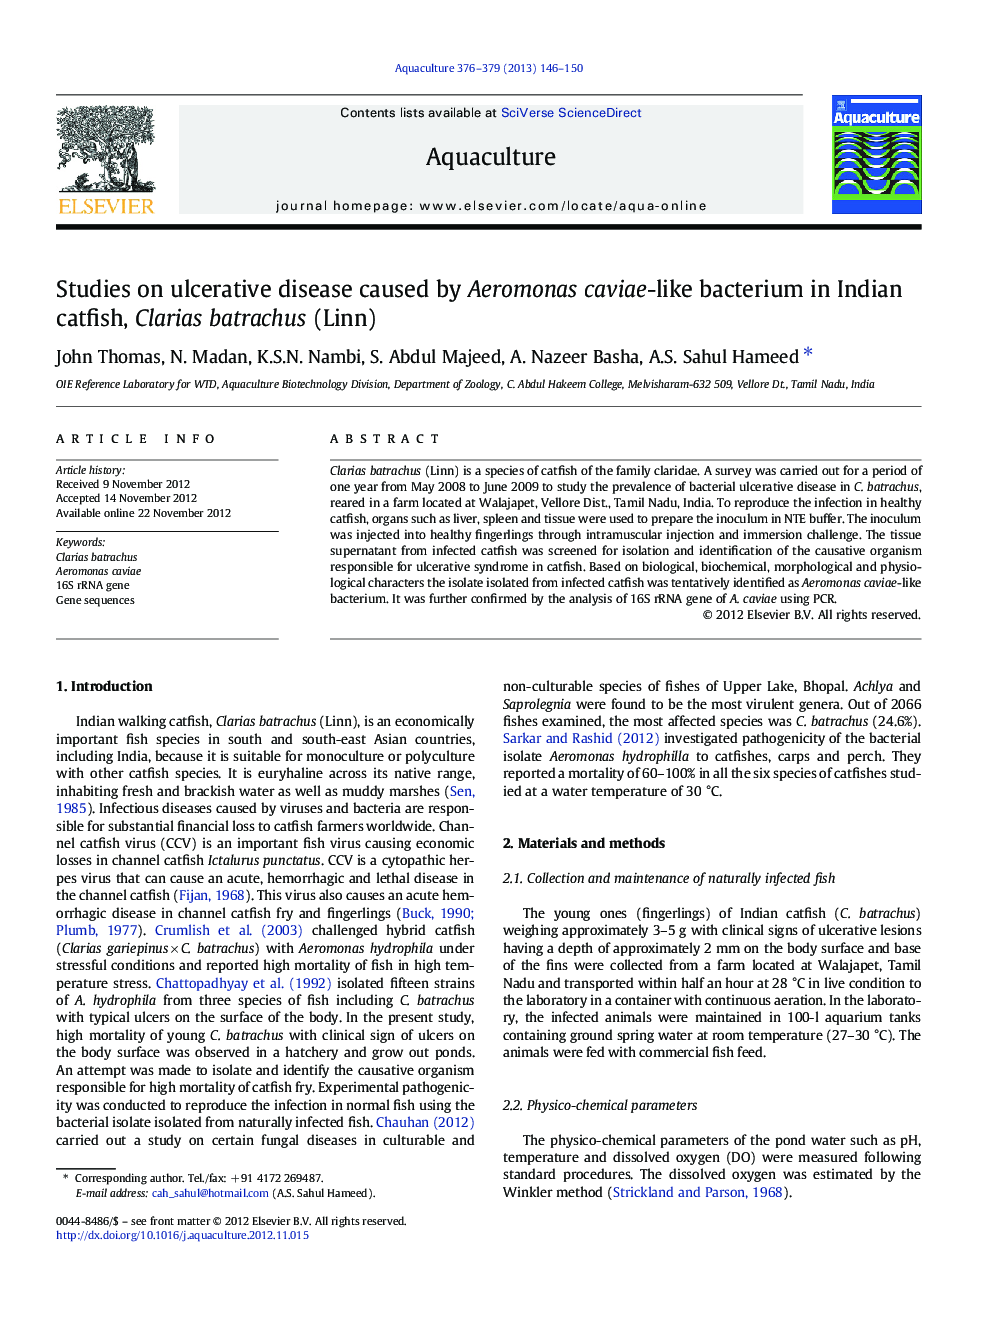 Studies on ulcerative disease caused by Aeromonas caviae-like bacterium in Indian catfish, Clarias batrachus (Linn)